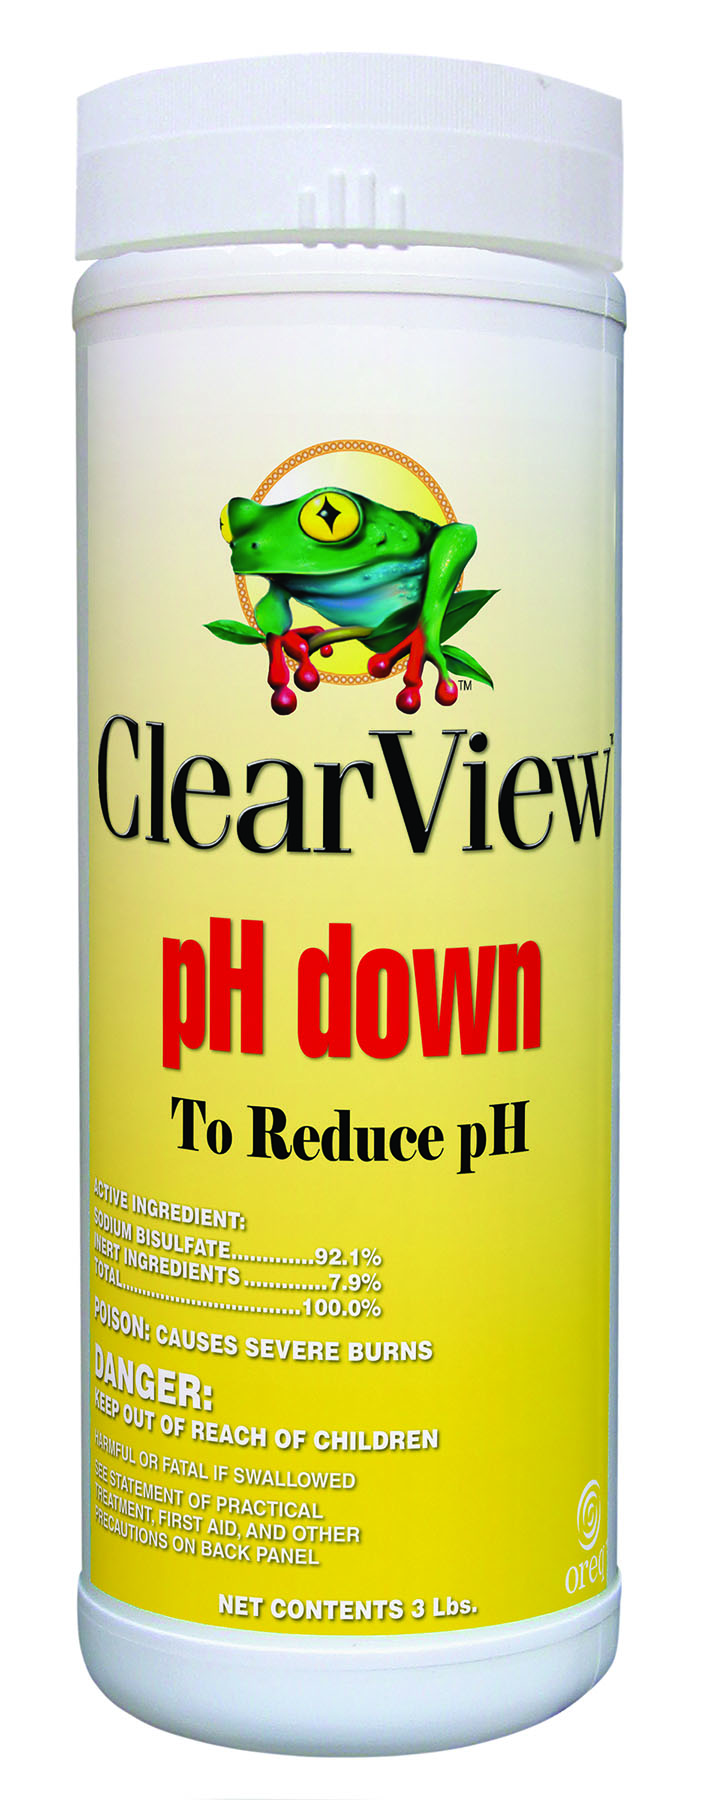 Clearview Ph Down 50 lb Pail